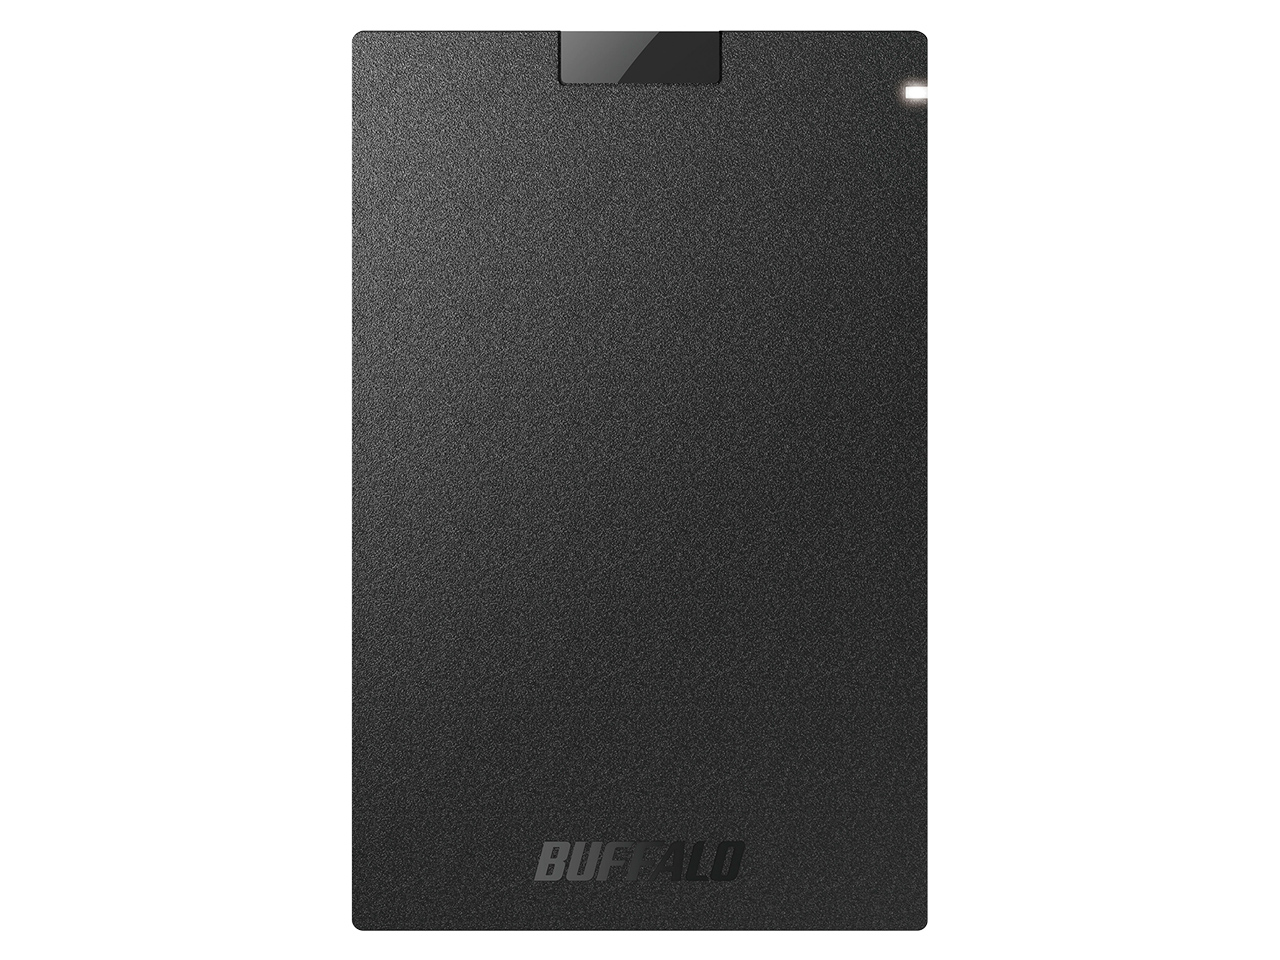 SSD-PG1.0U3-BC/N [ブラック]